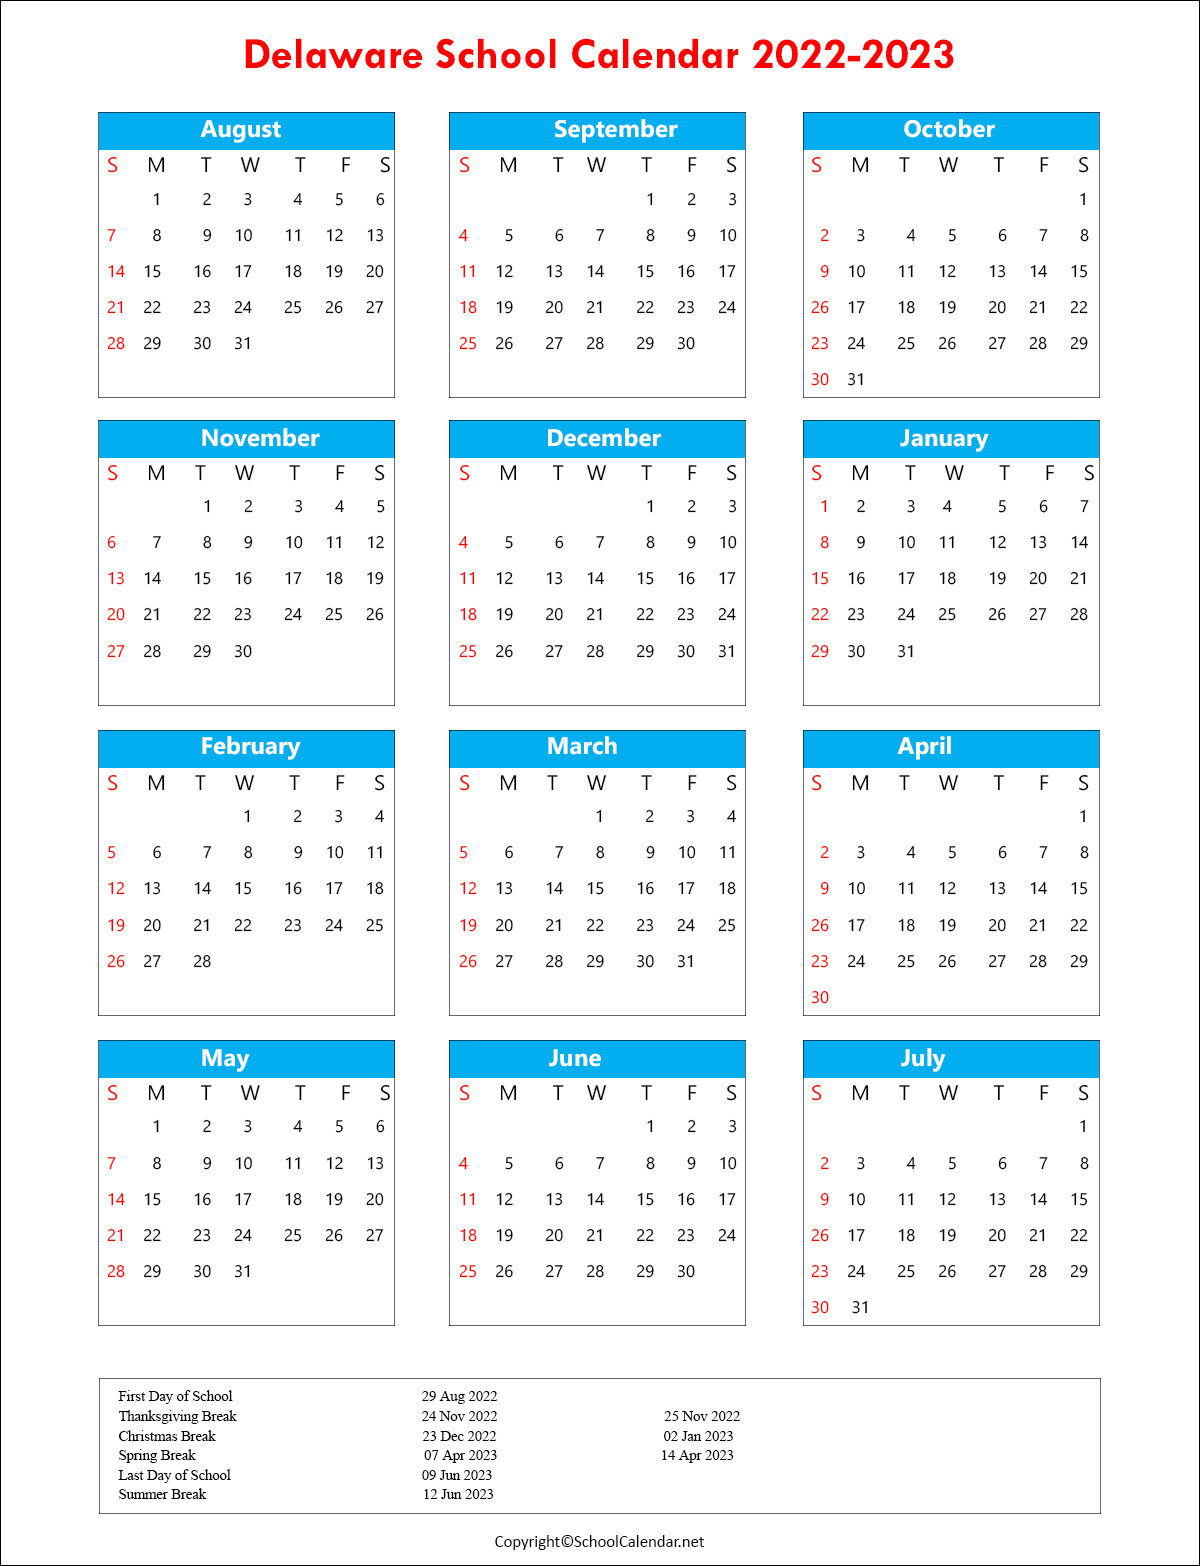 Delaware School Calendar 2022